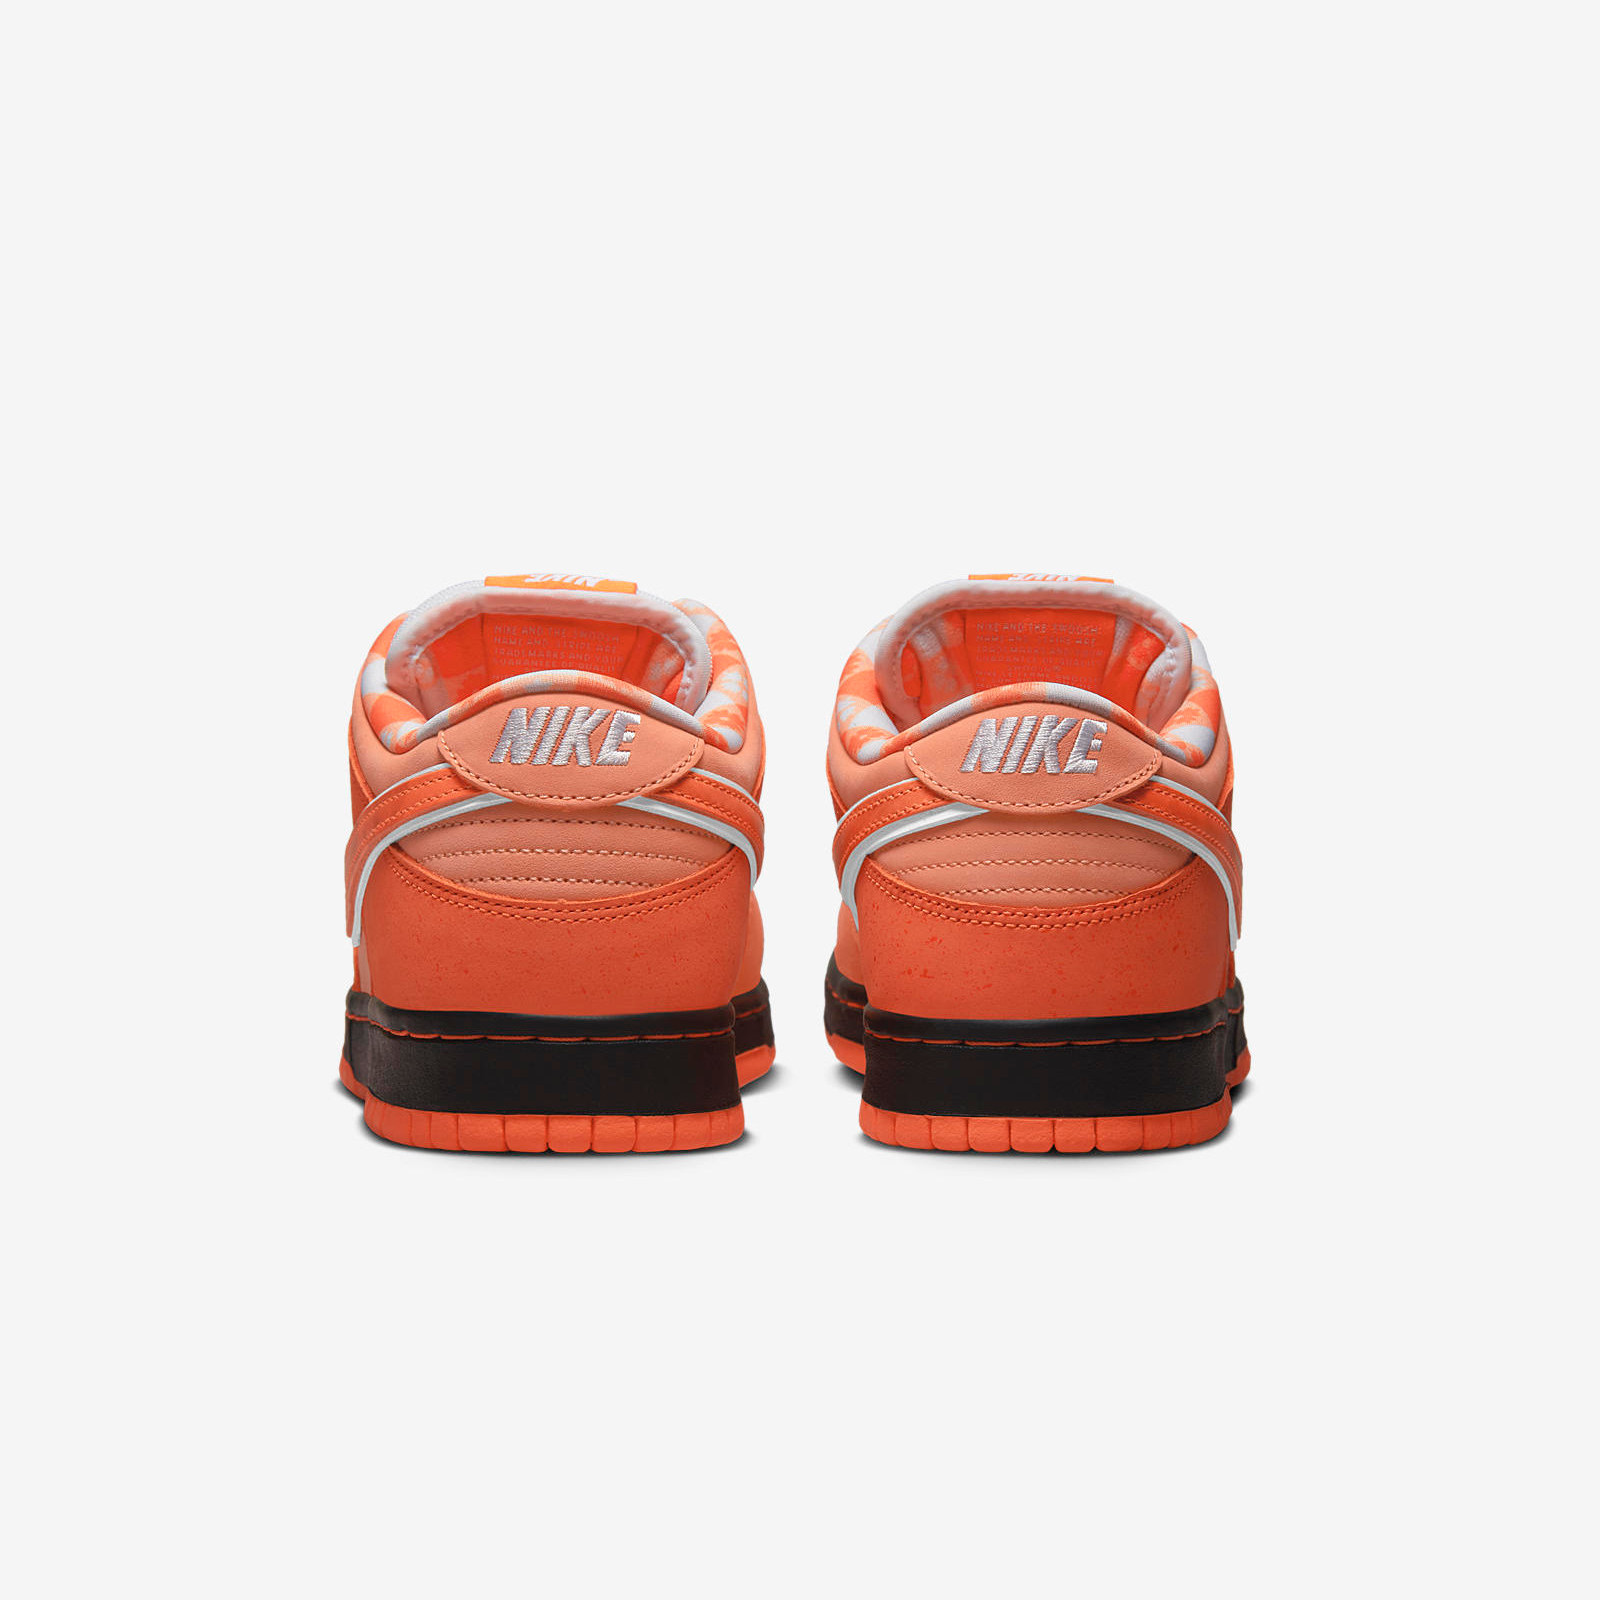 Concepts x Nike SB
Dunk Low
« Orange Lobster »